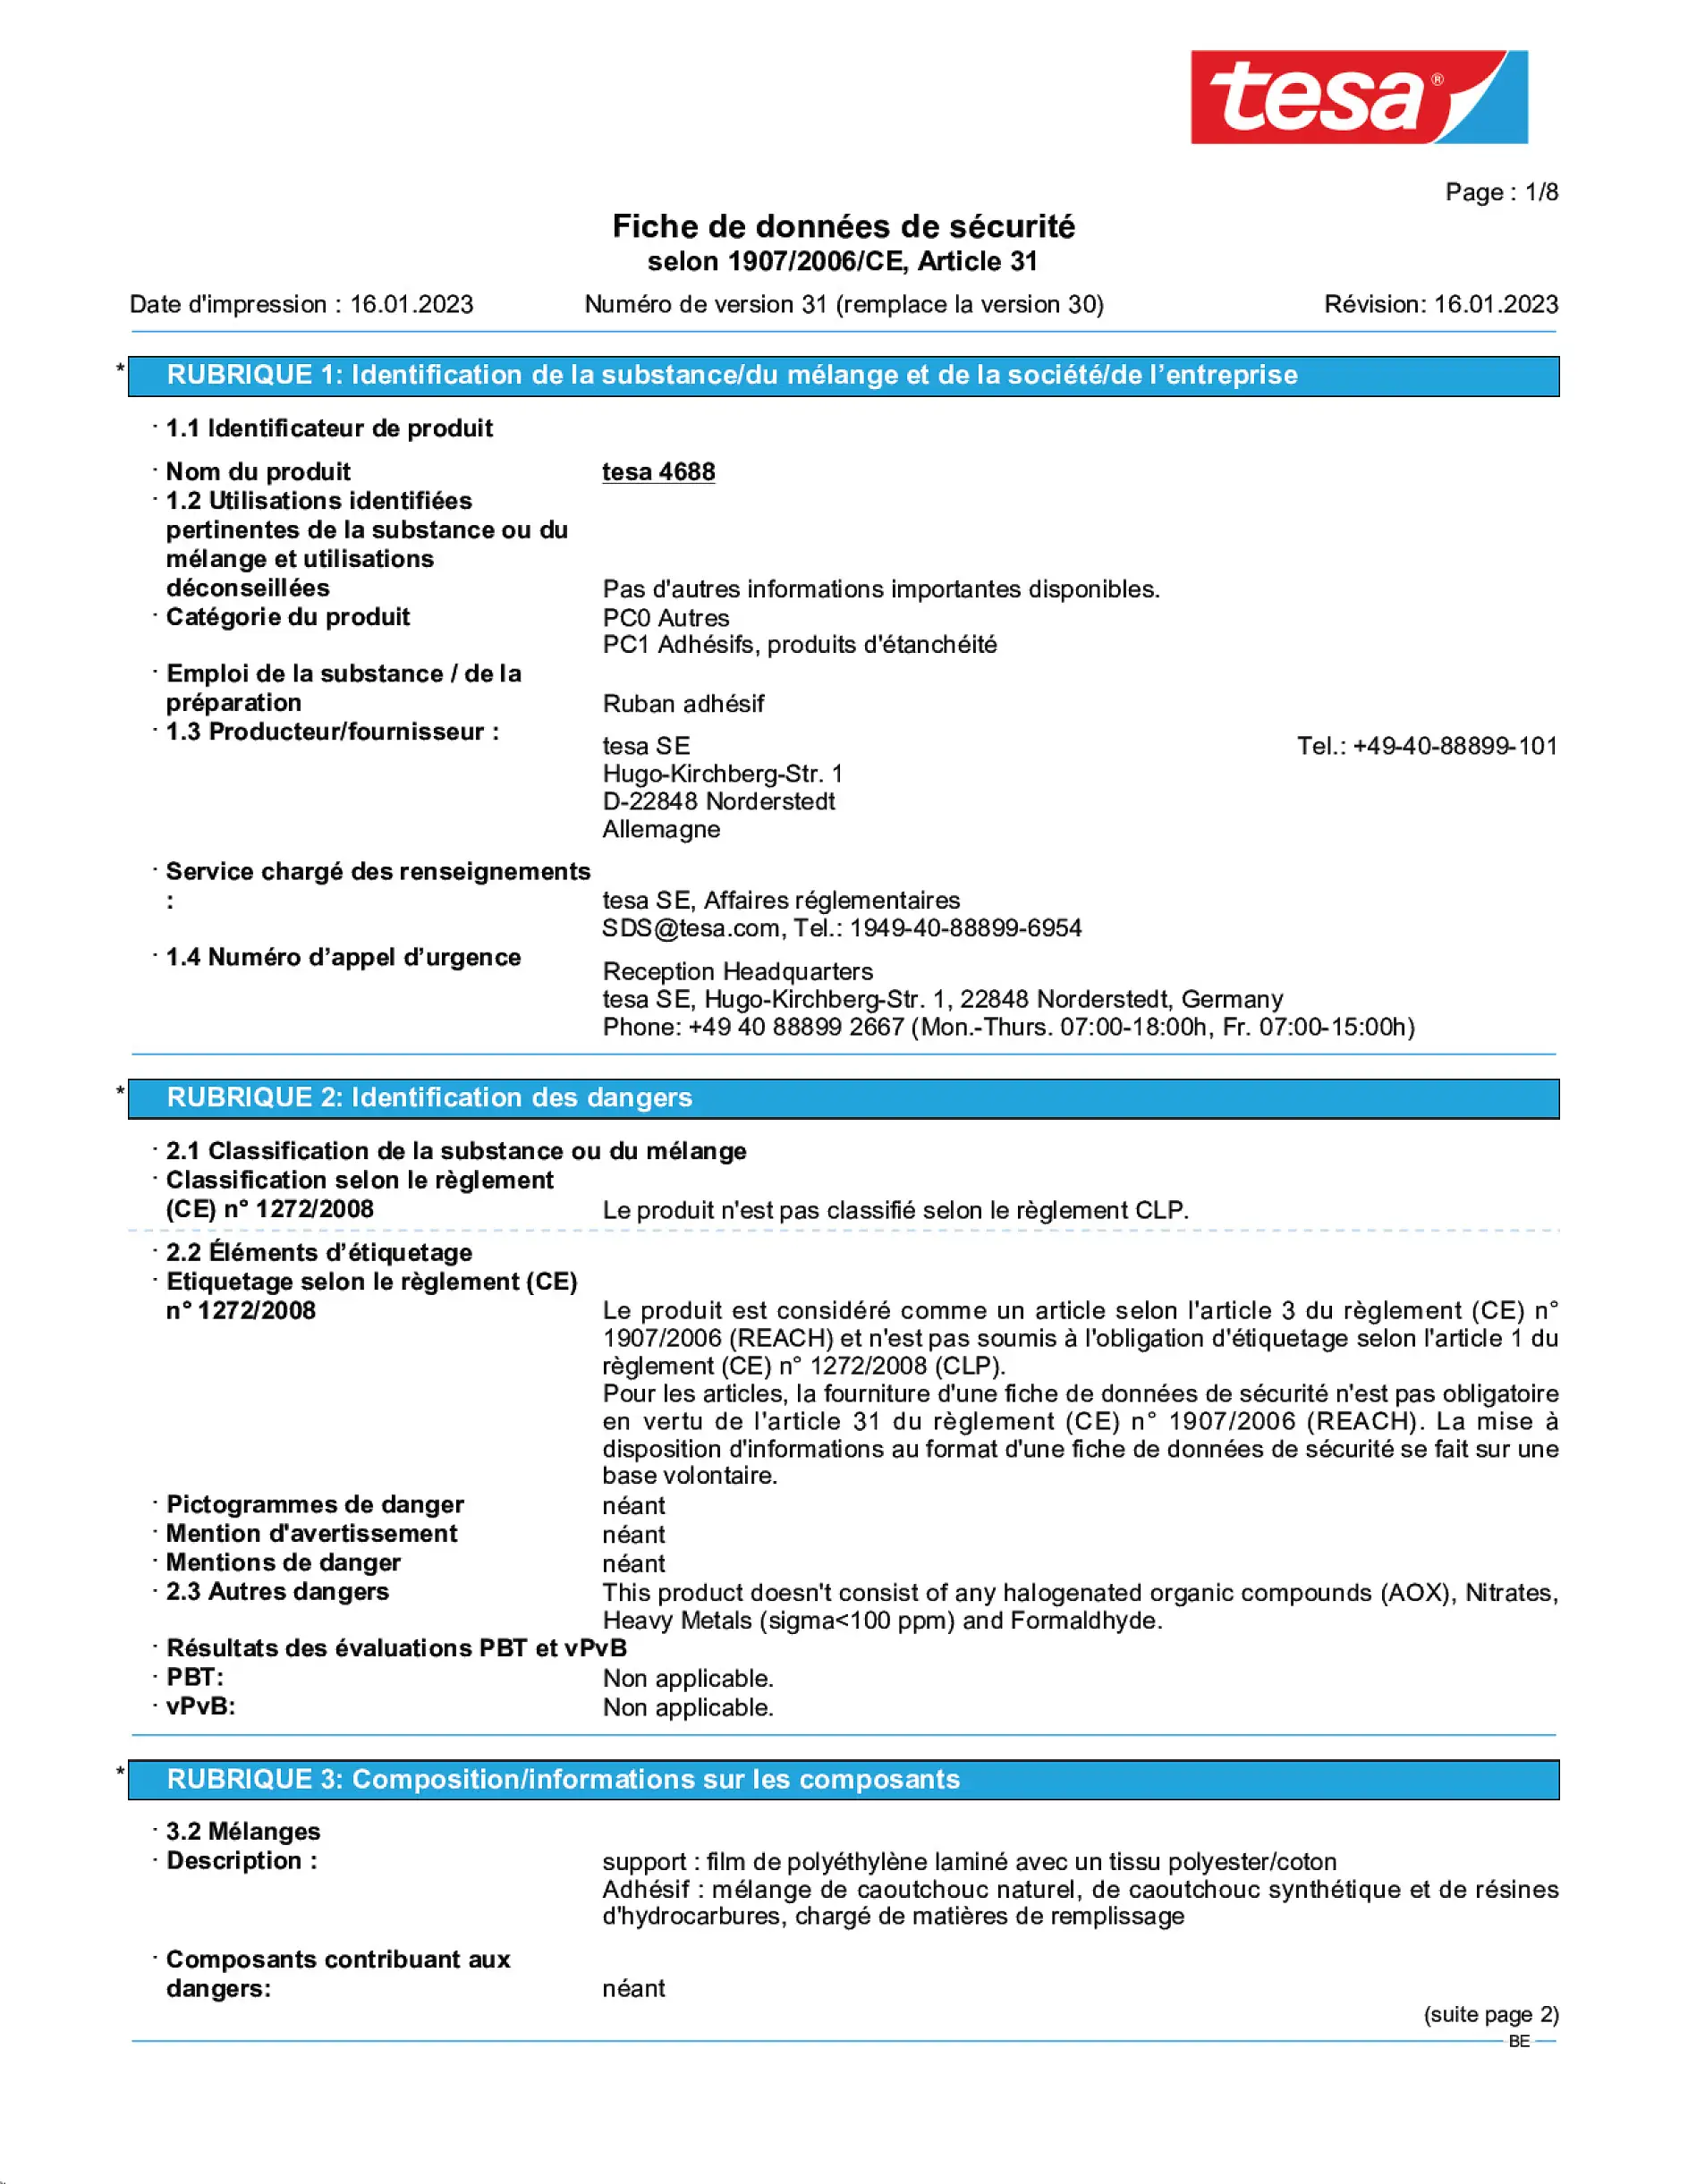 Safety data sheet_tesa® Professional 04688_nl-BE_v31